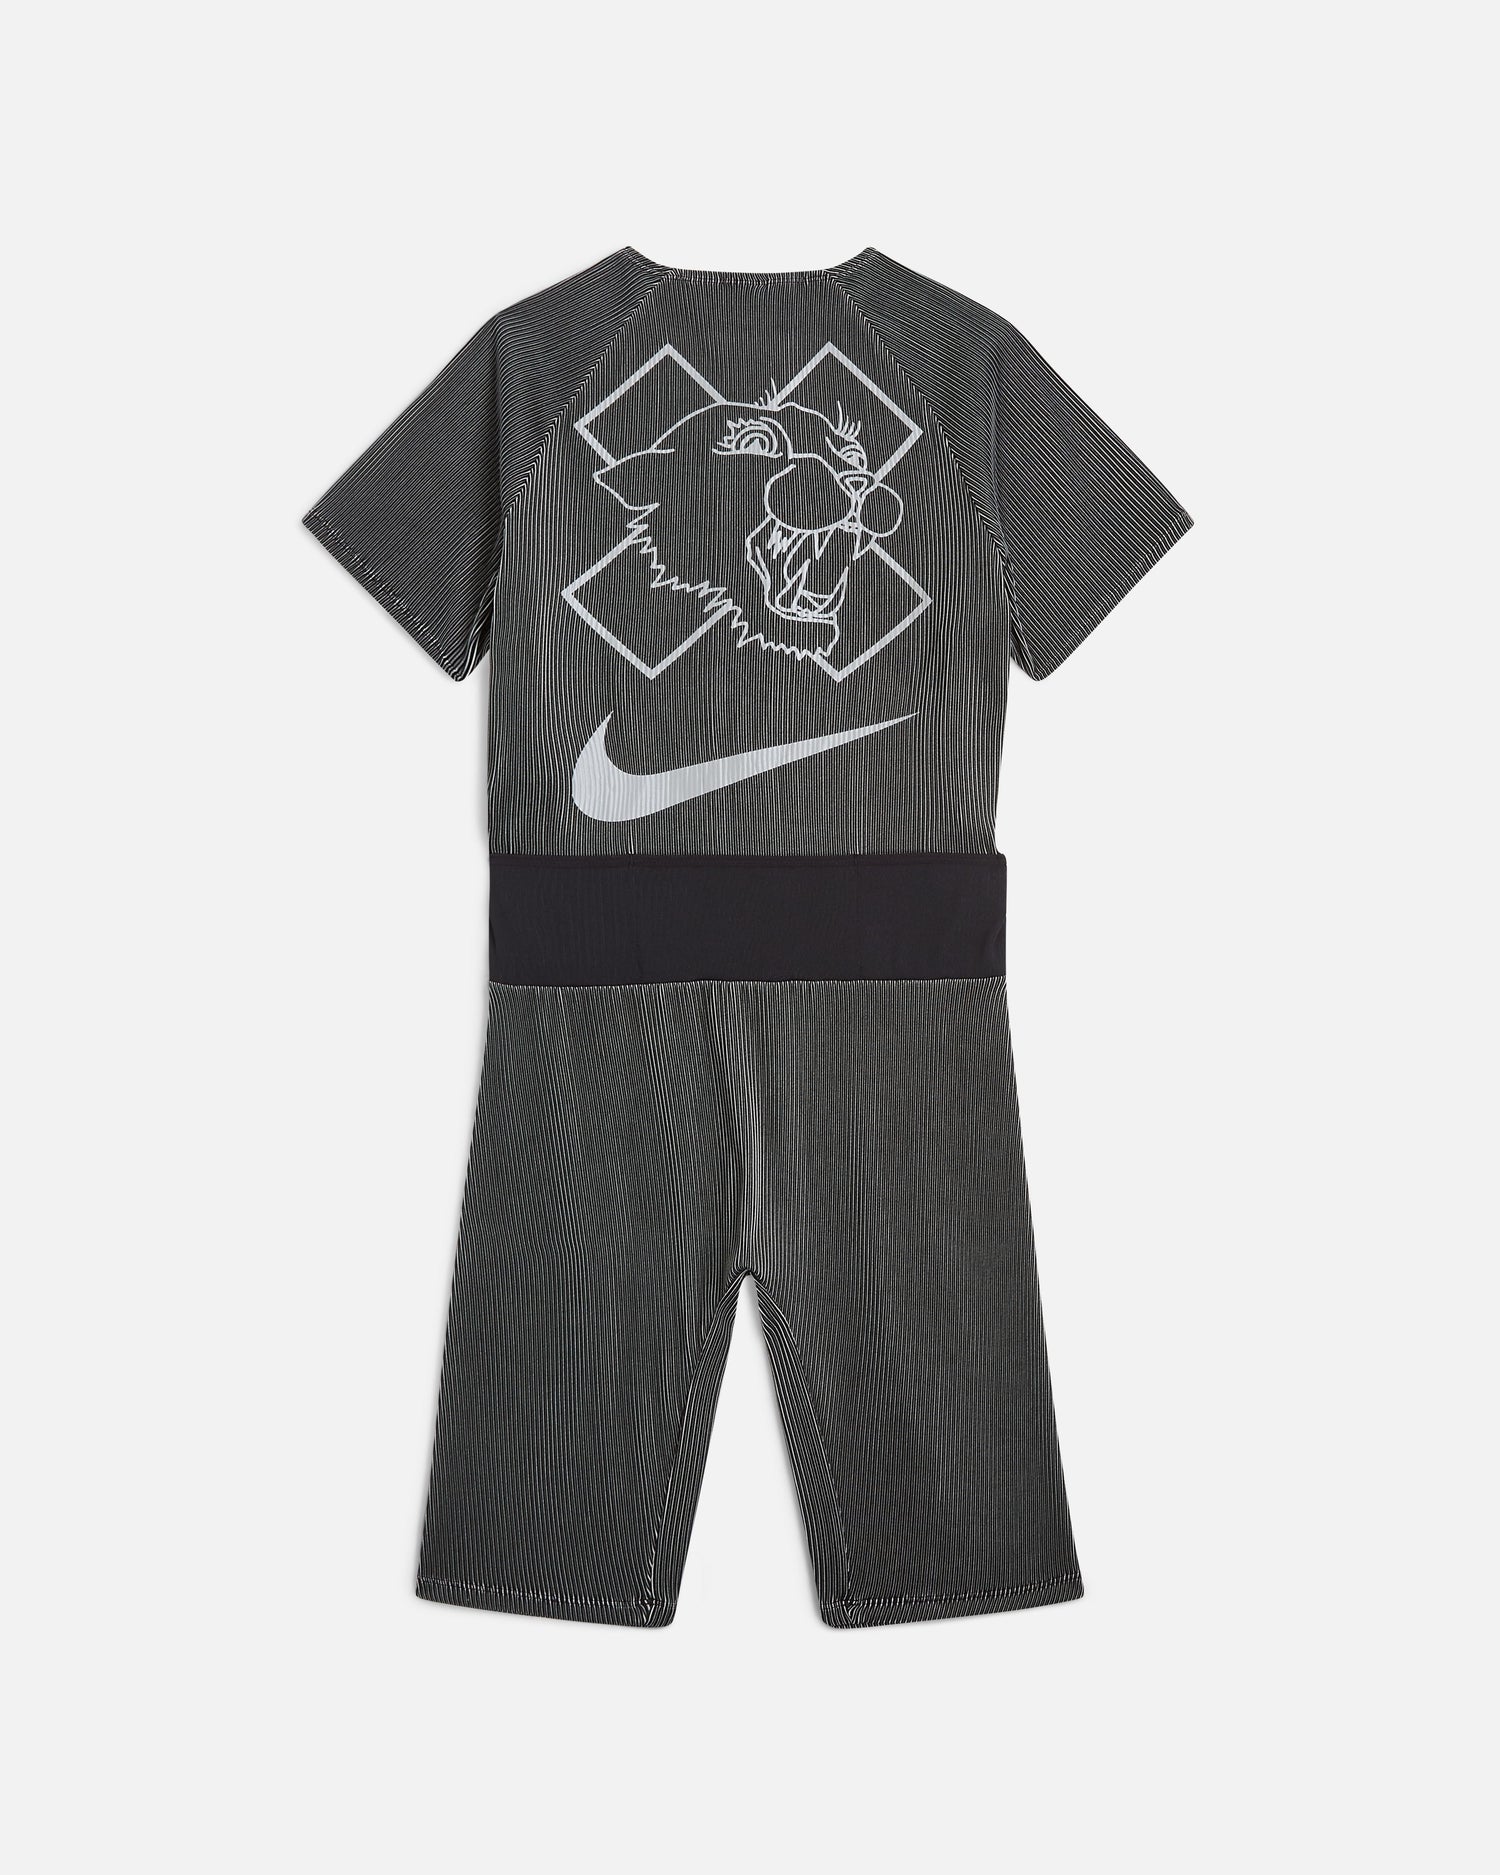 Nike x Patta Running Team Race Suit (Black/Grey)